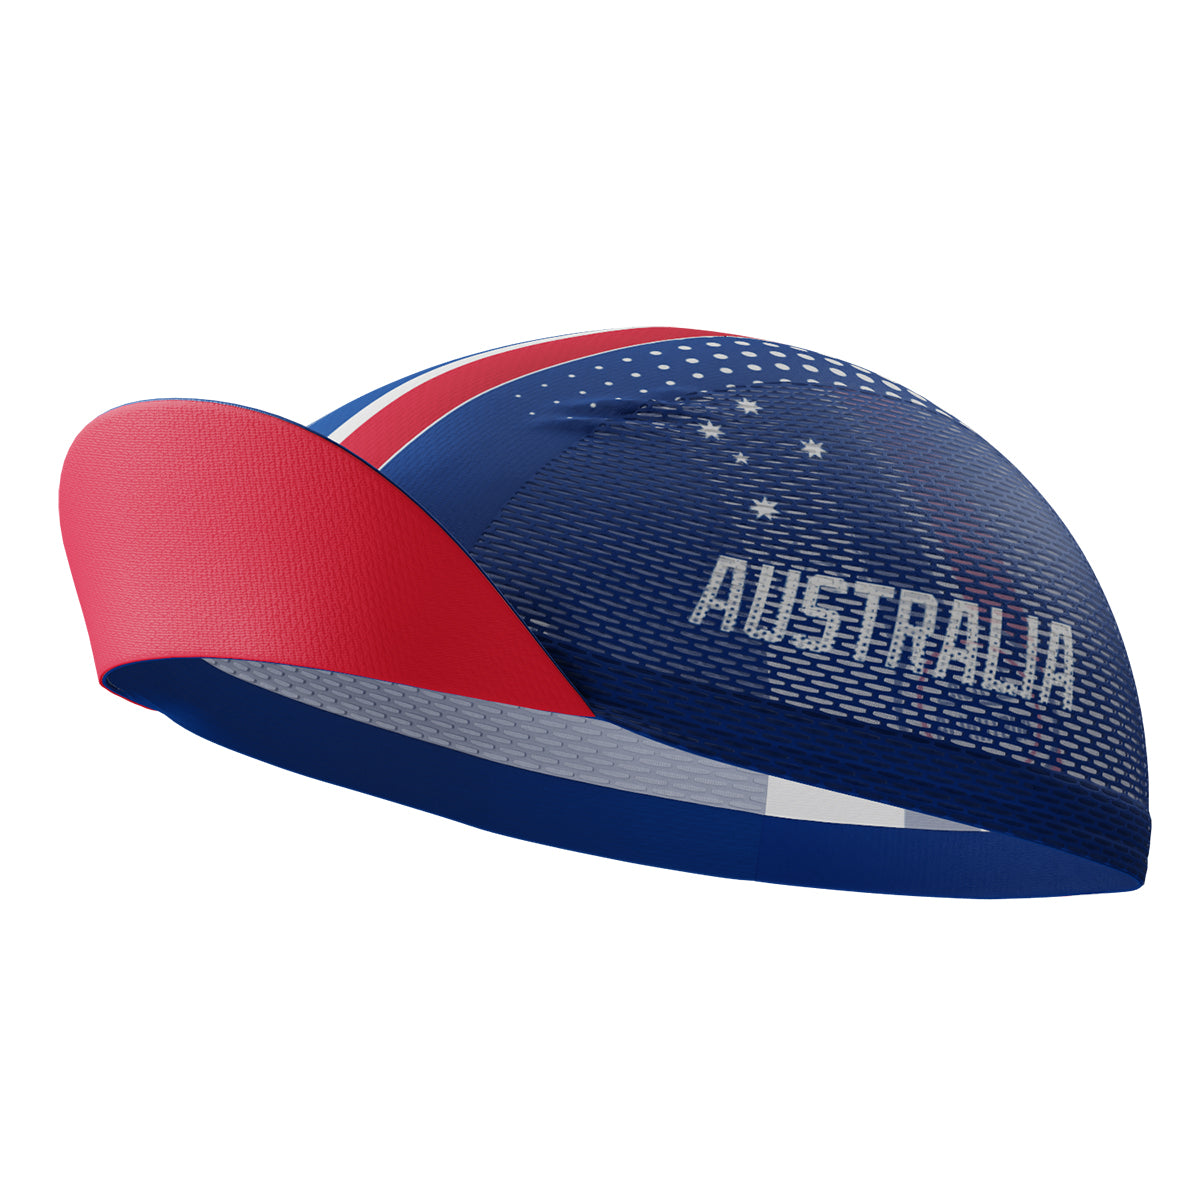 Unisex World Countries Team Australia Icon Quick Dry Cycling Cap